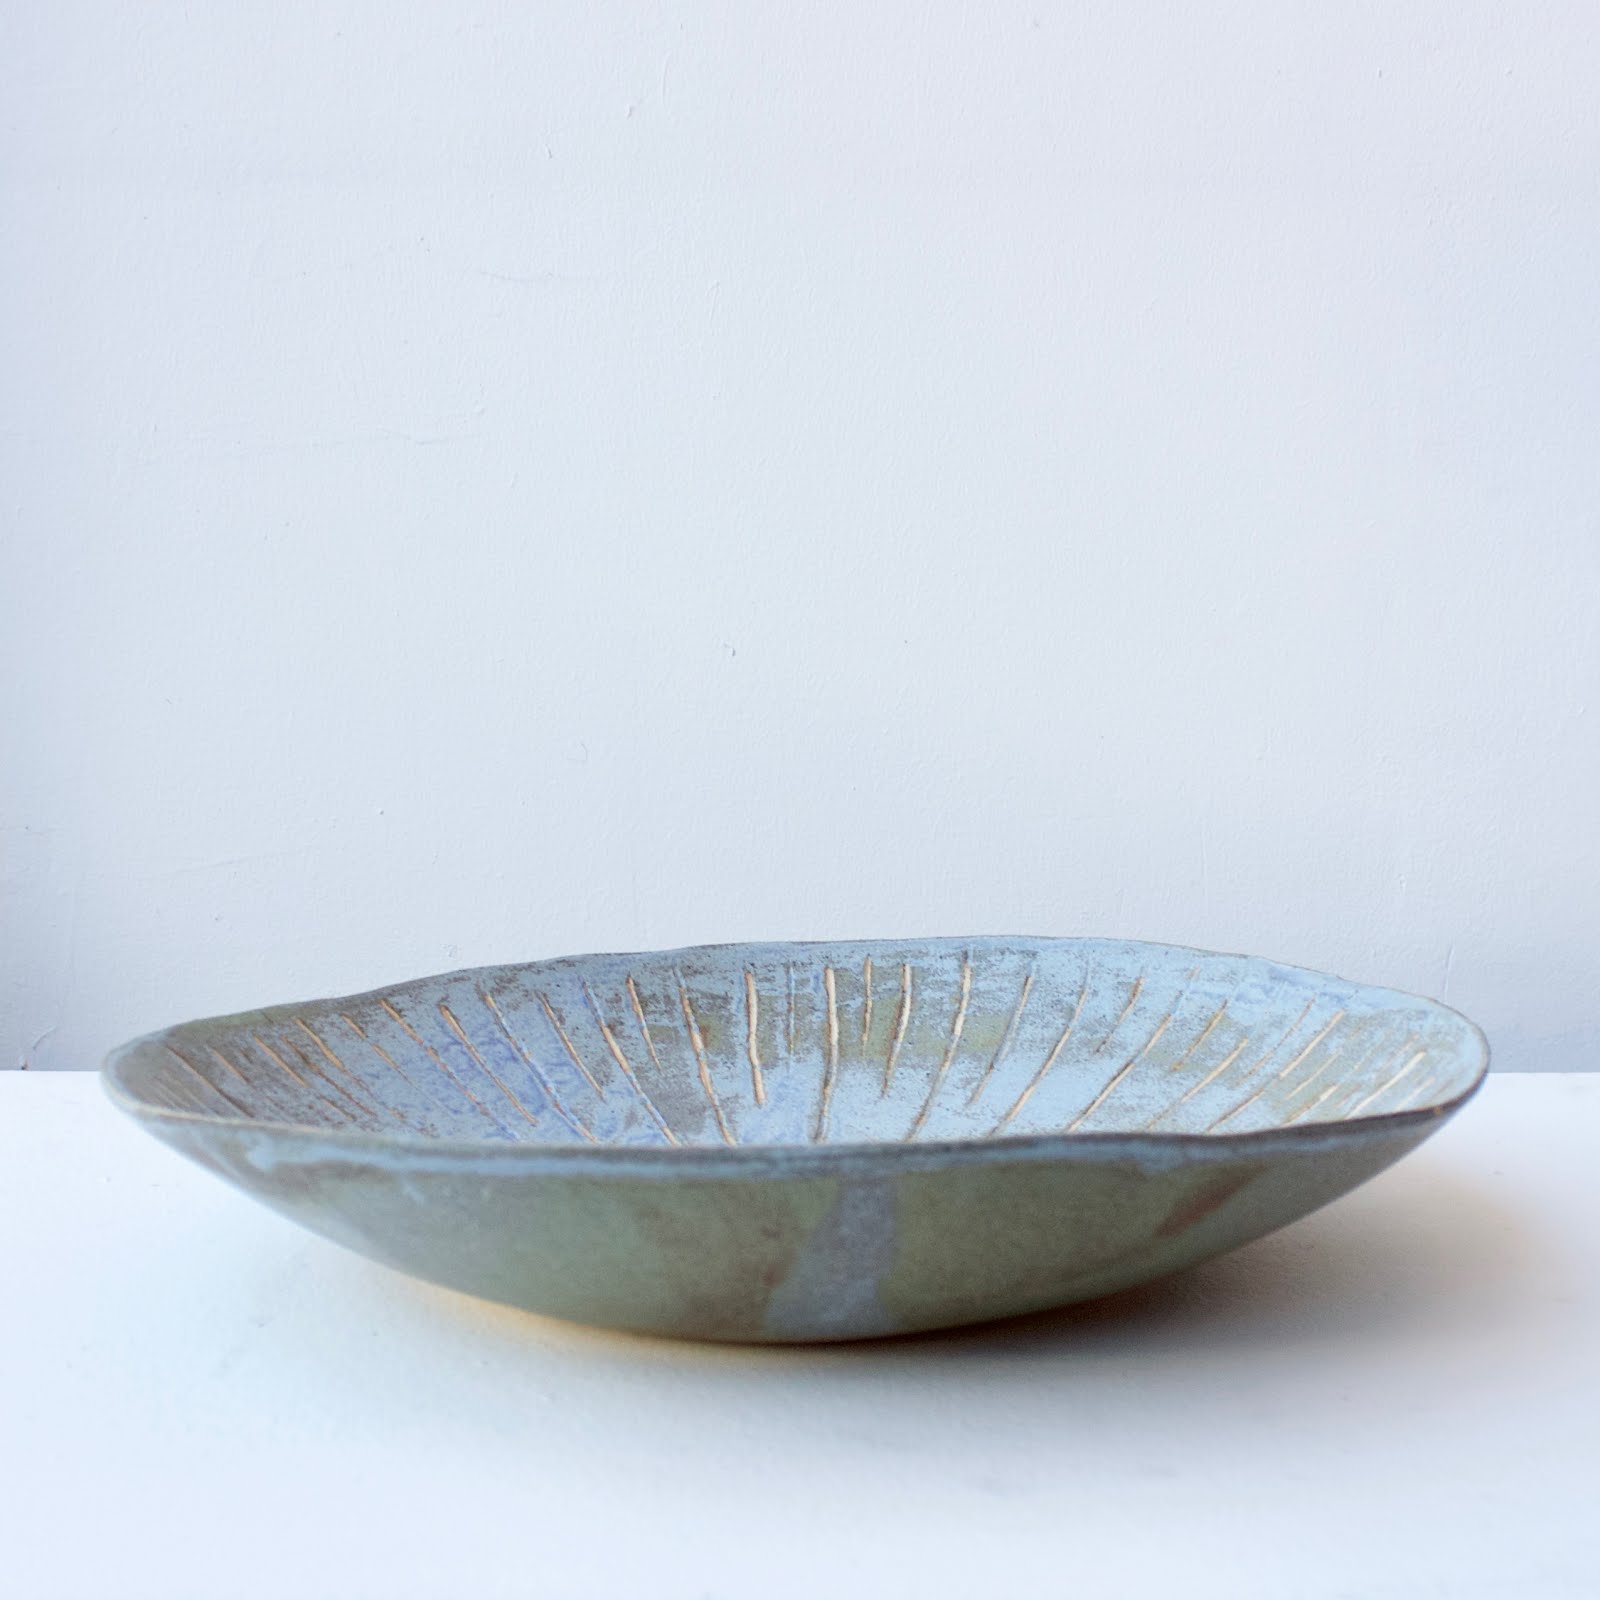 Handmade ceramic bowl - SOLD